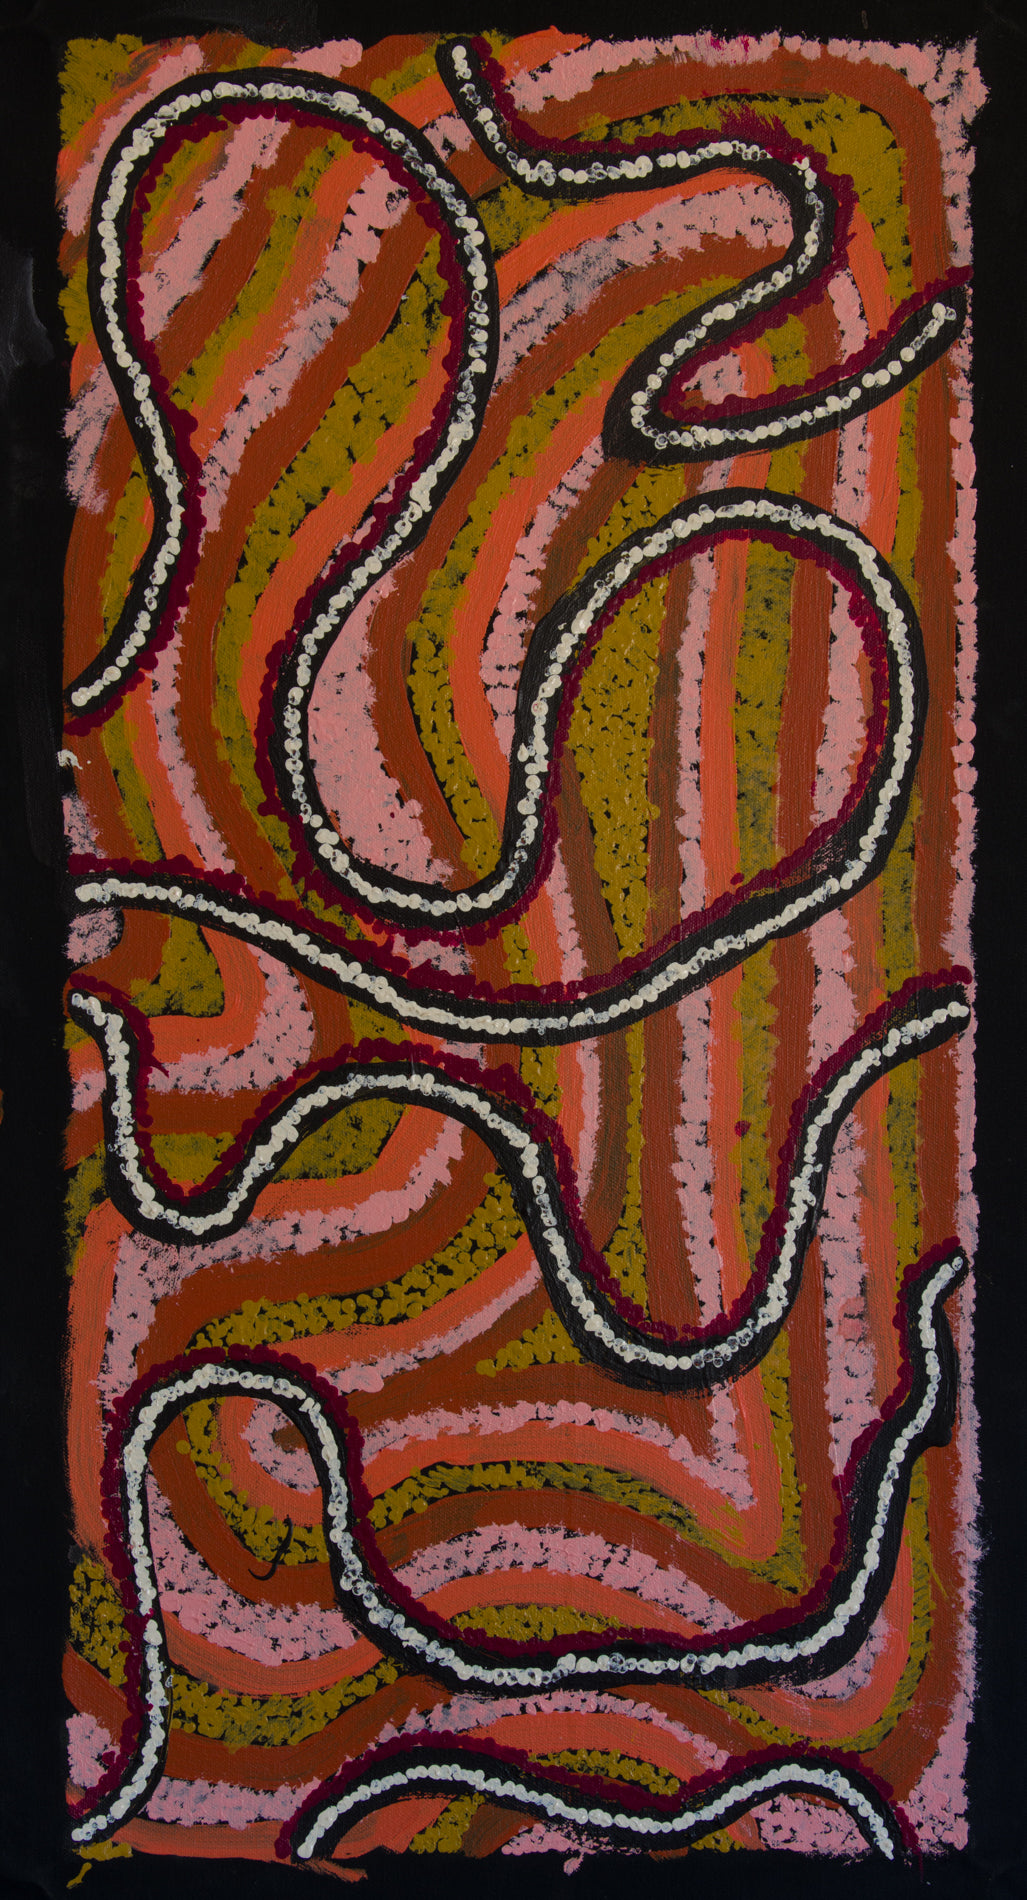 Acrylic on Canvas by Yangi Yangi Fox of Minyma Kutjara Arts Centre